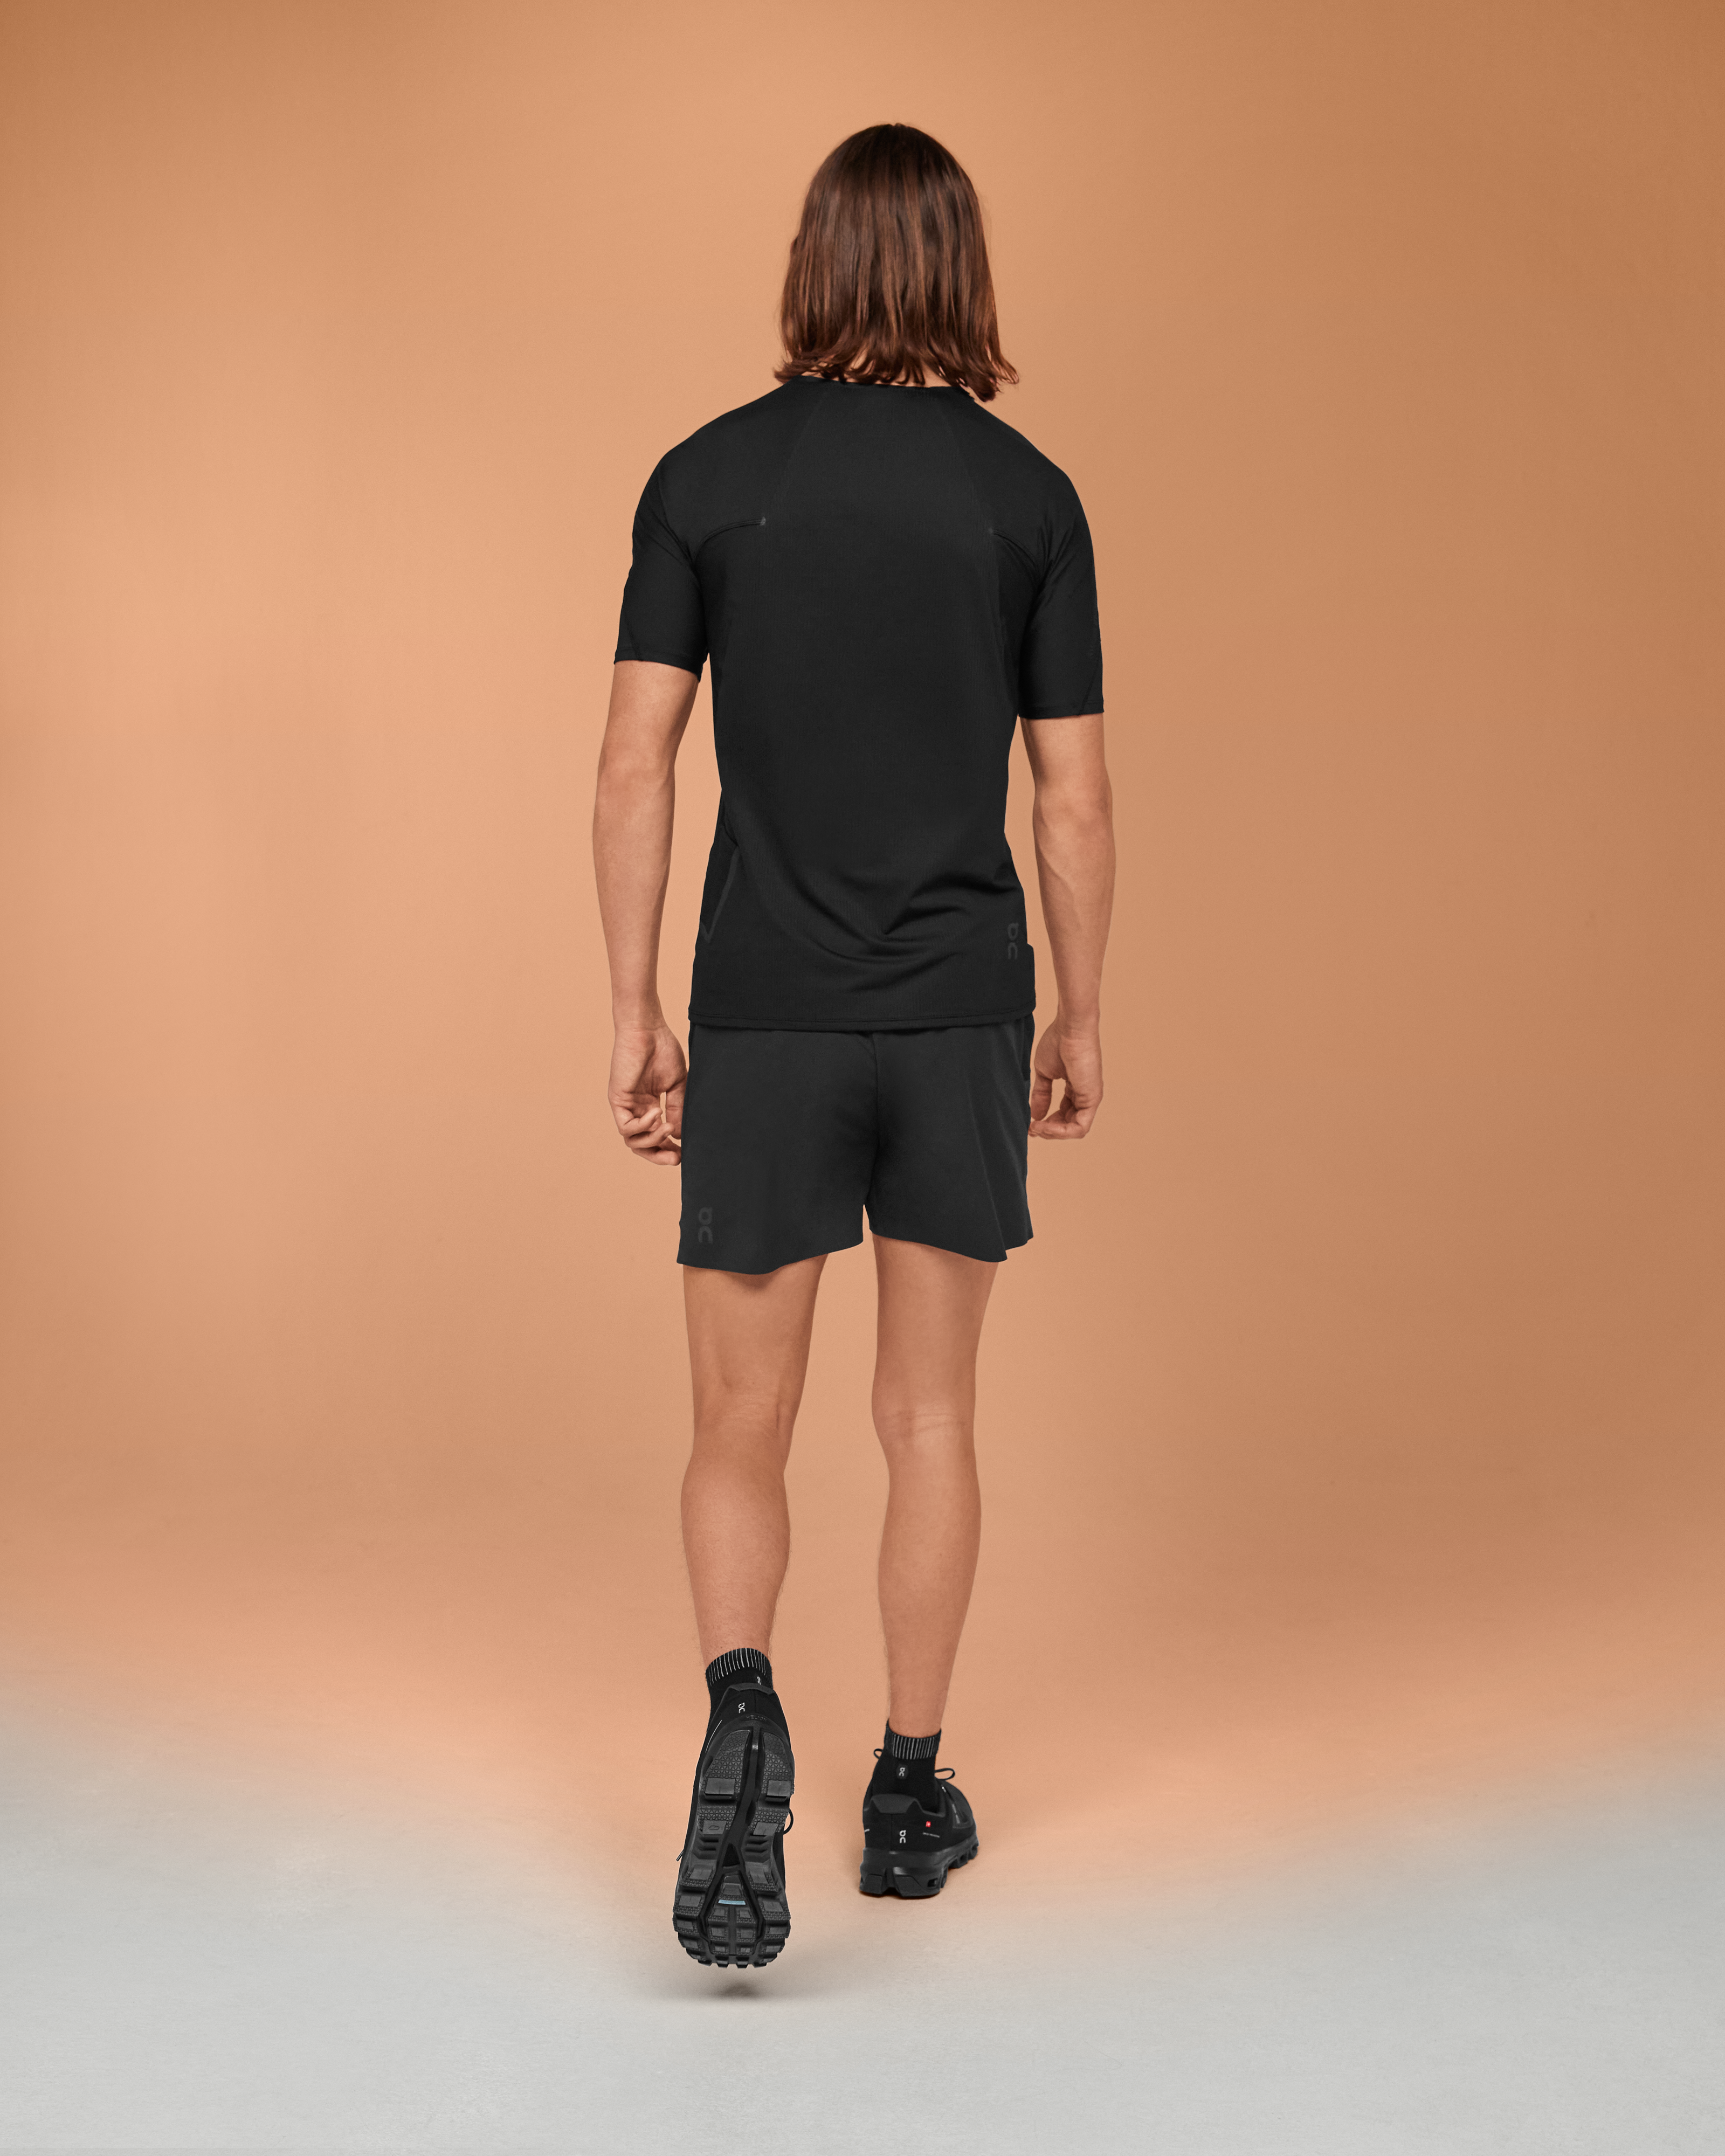 Men's Ultra Shorts | Black | On United States